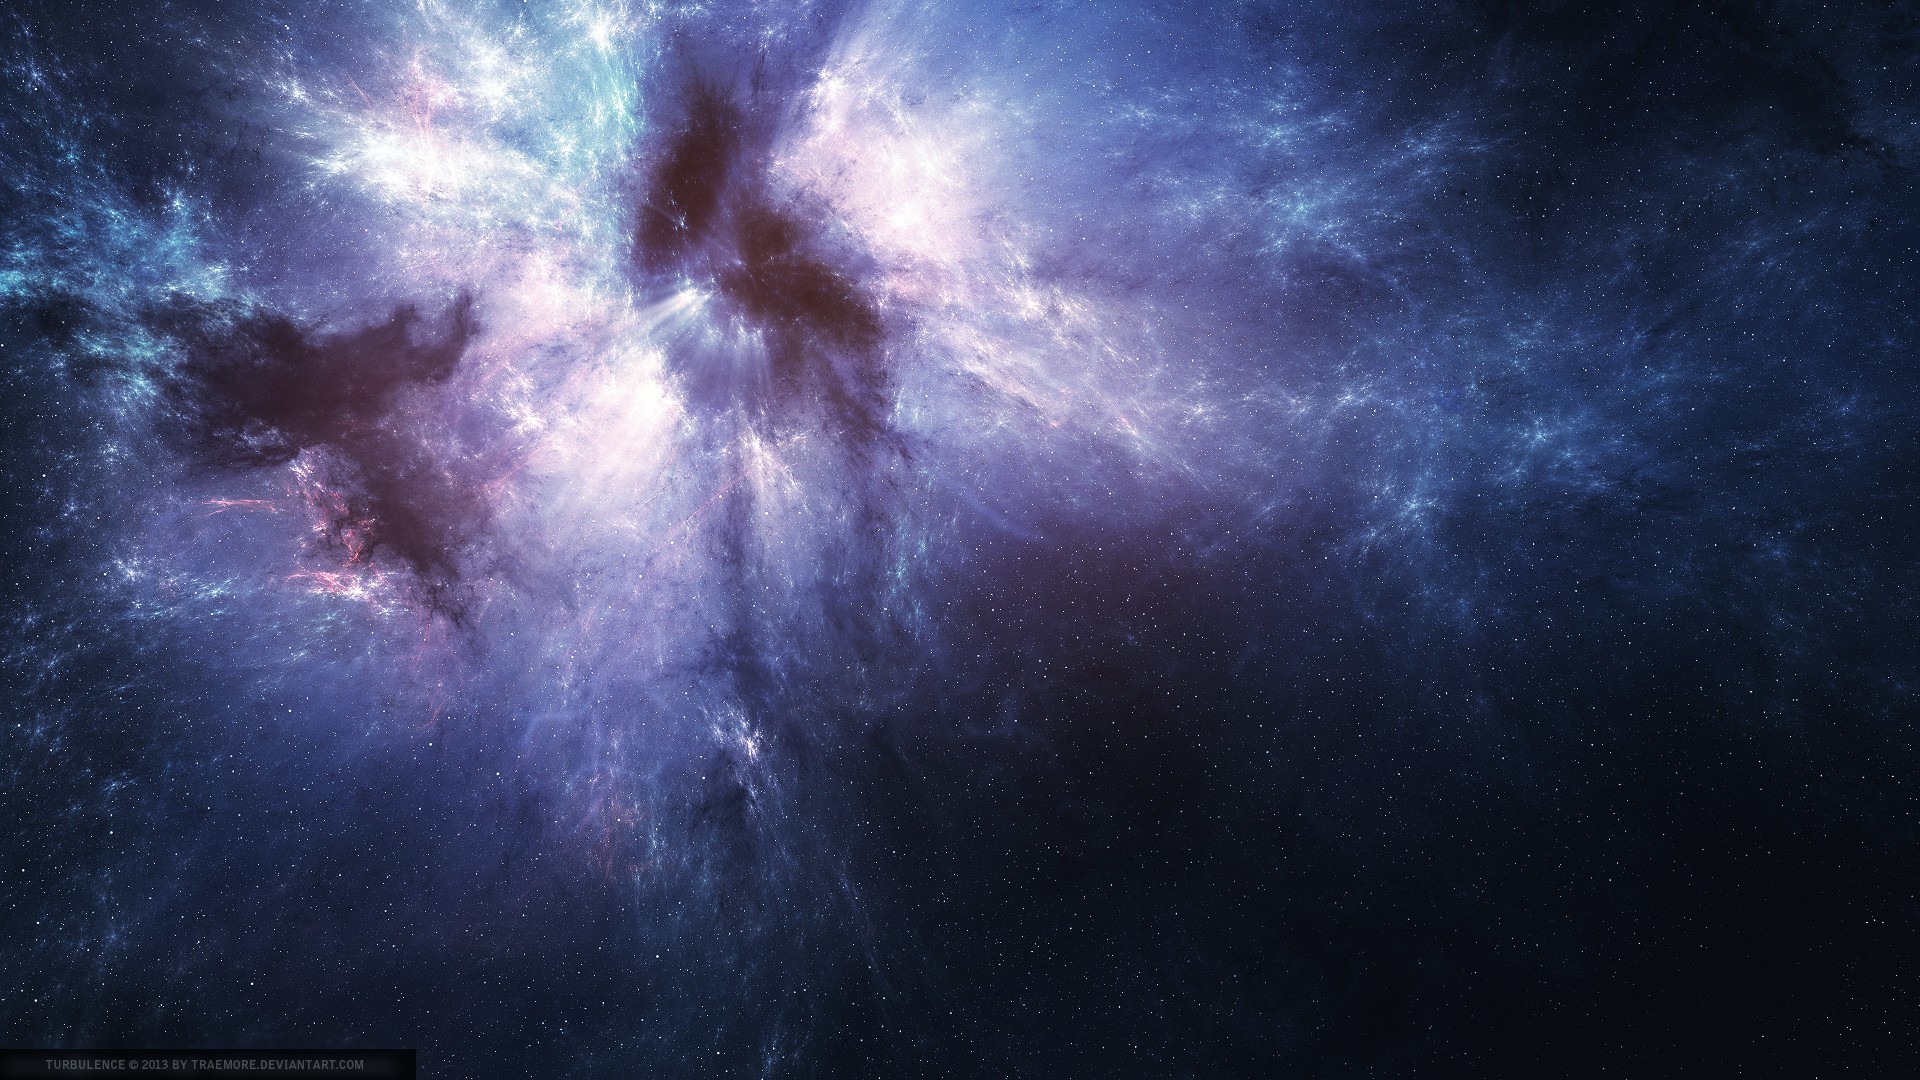 Space Nebula Digital Art Space Art 2013 Year 1920x1080